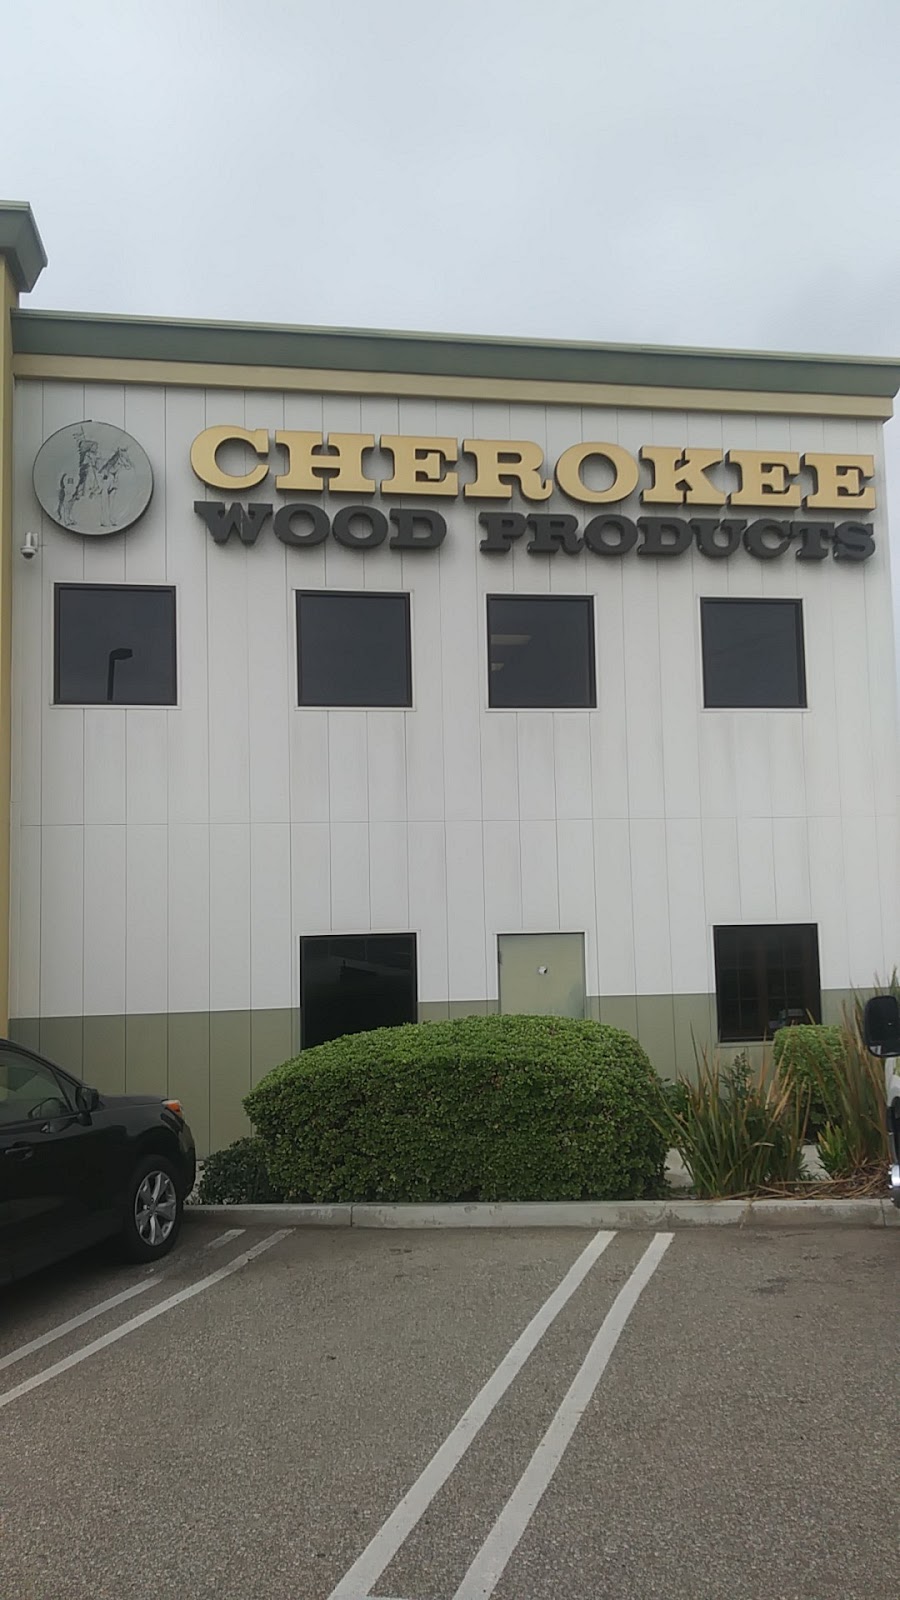 Cherokee Wood Products | 1390 E Arrow Hwy, Upland, CA 91786 | Phone: (909) 920-5430